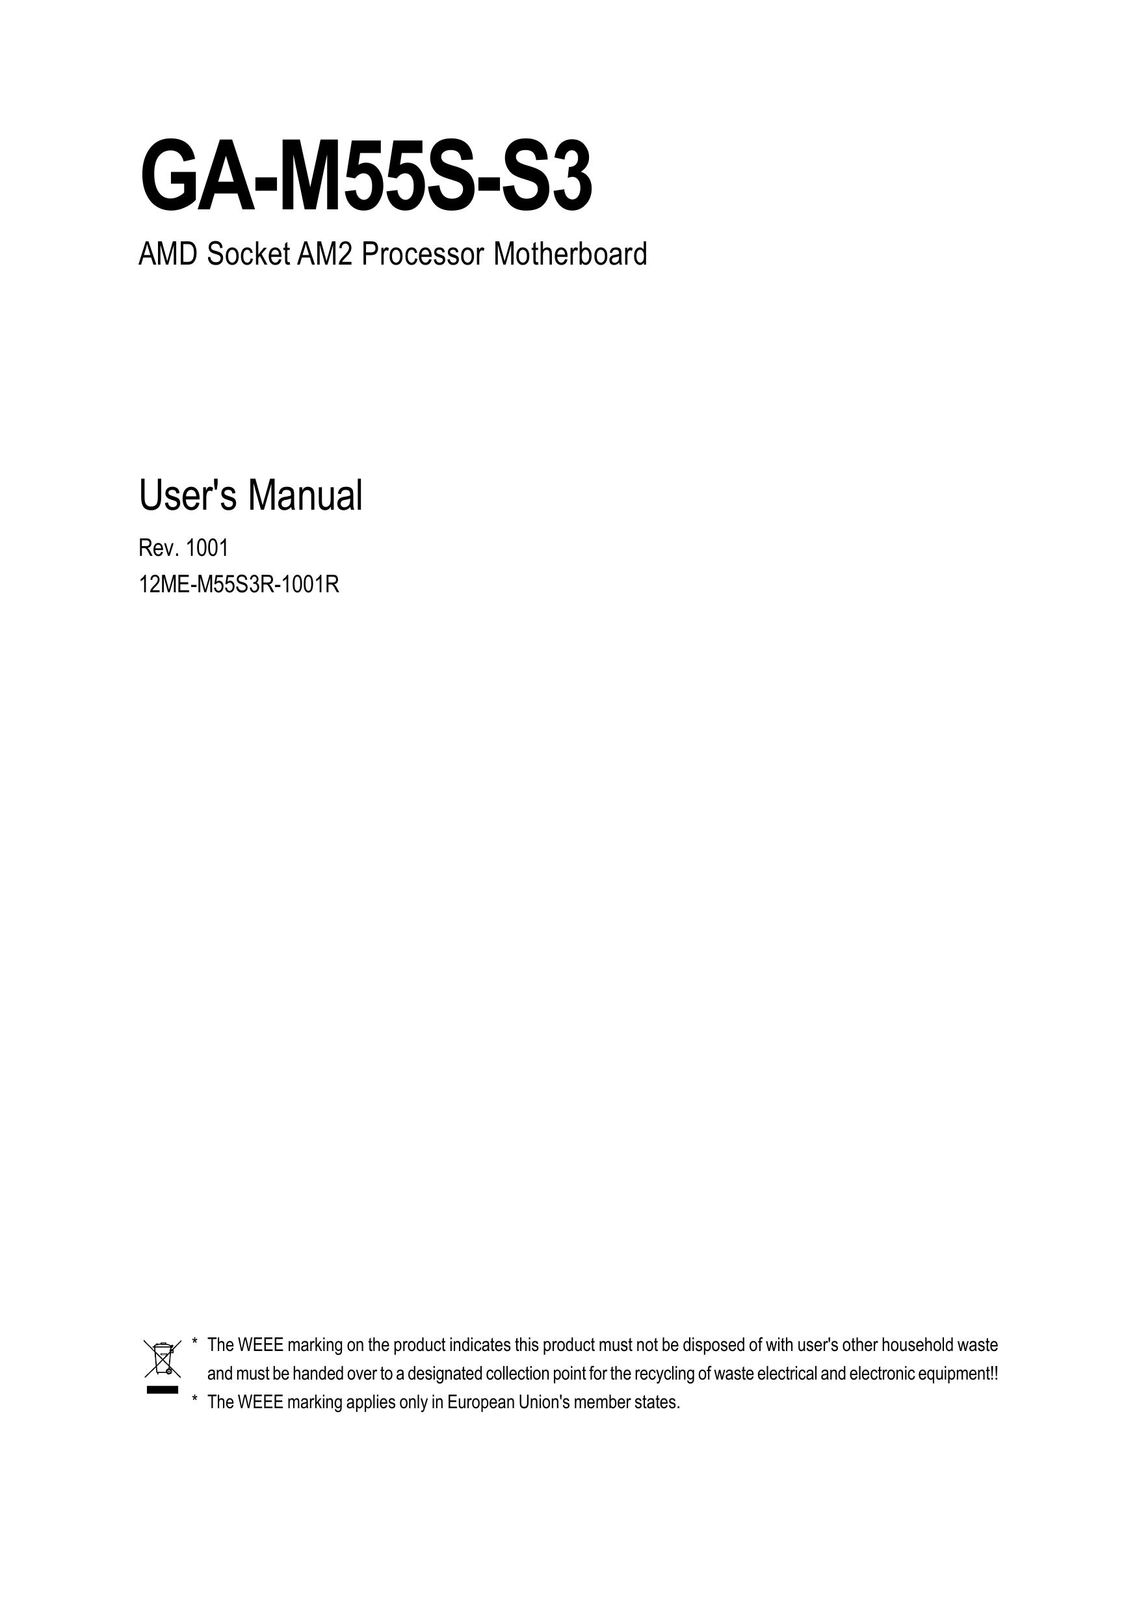 AMD GA-M55S-S3 Computer Hardware User Manual